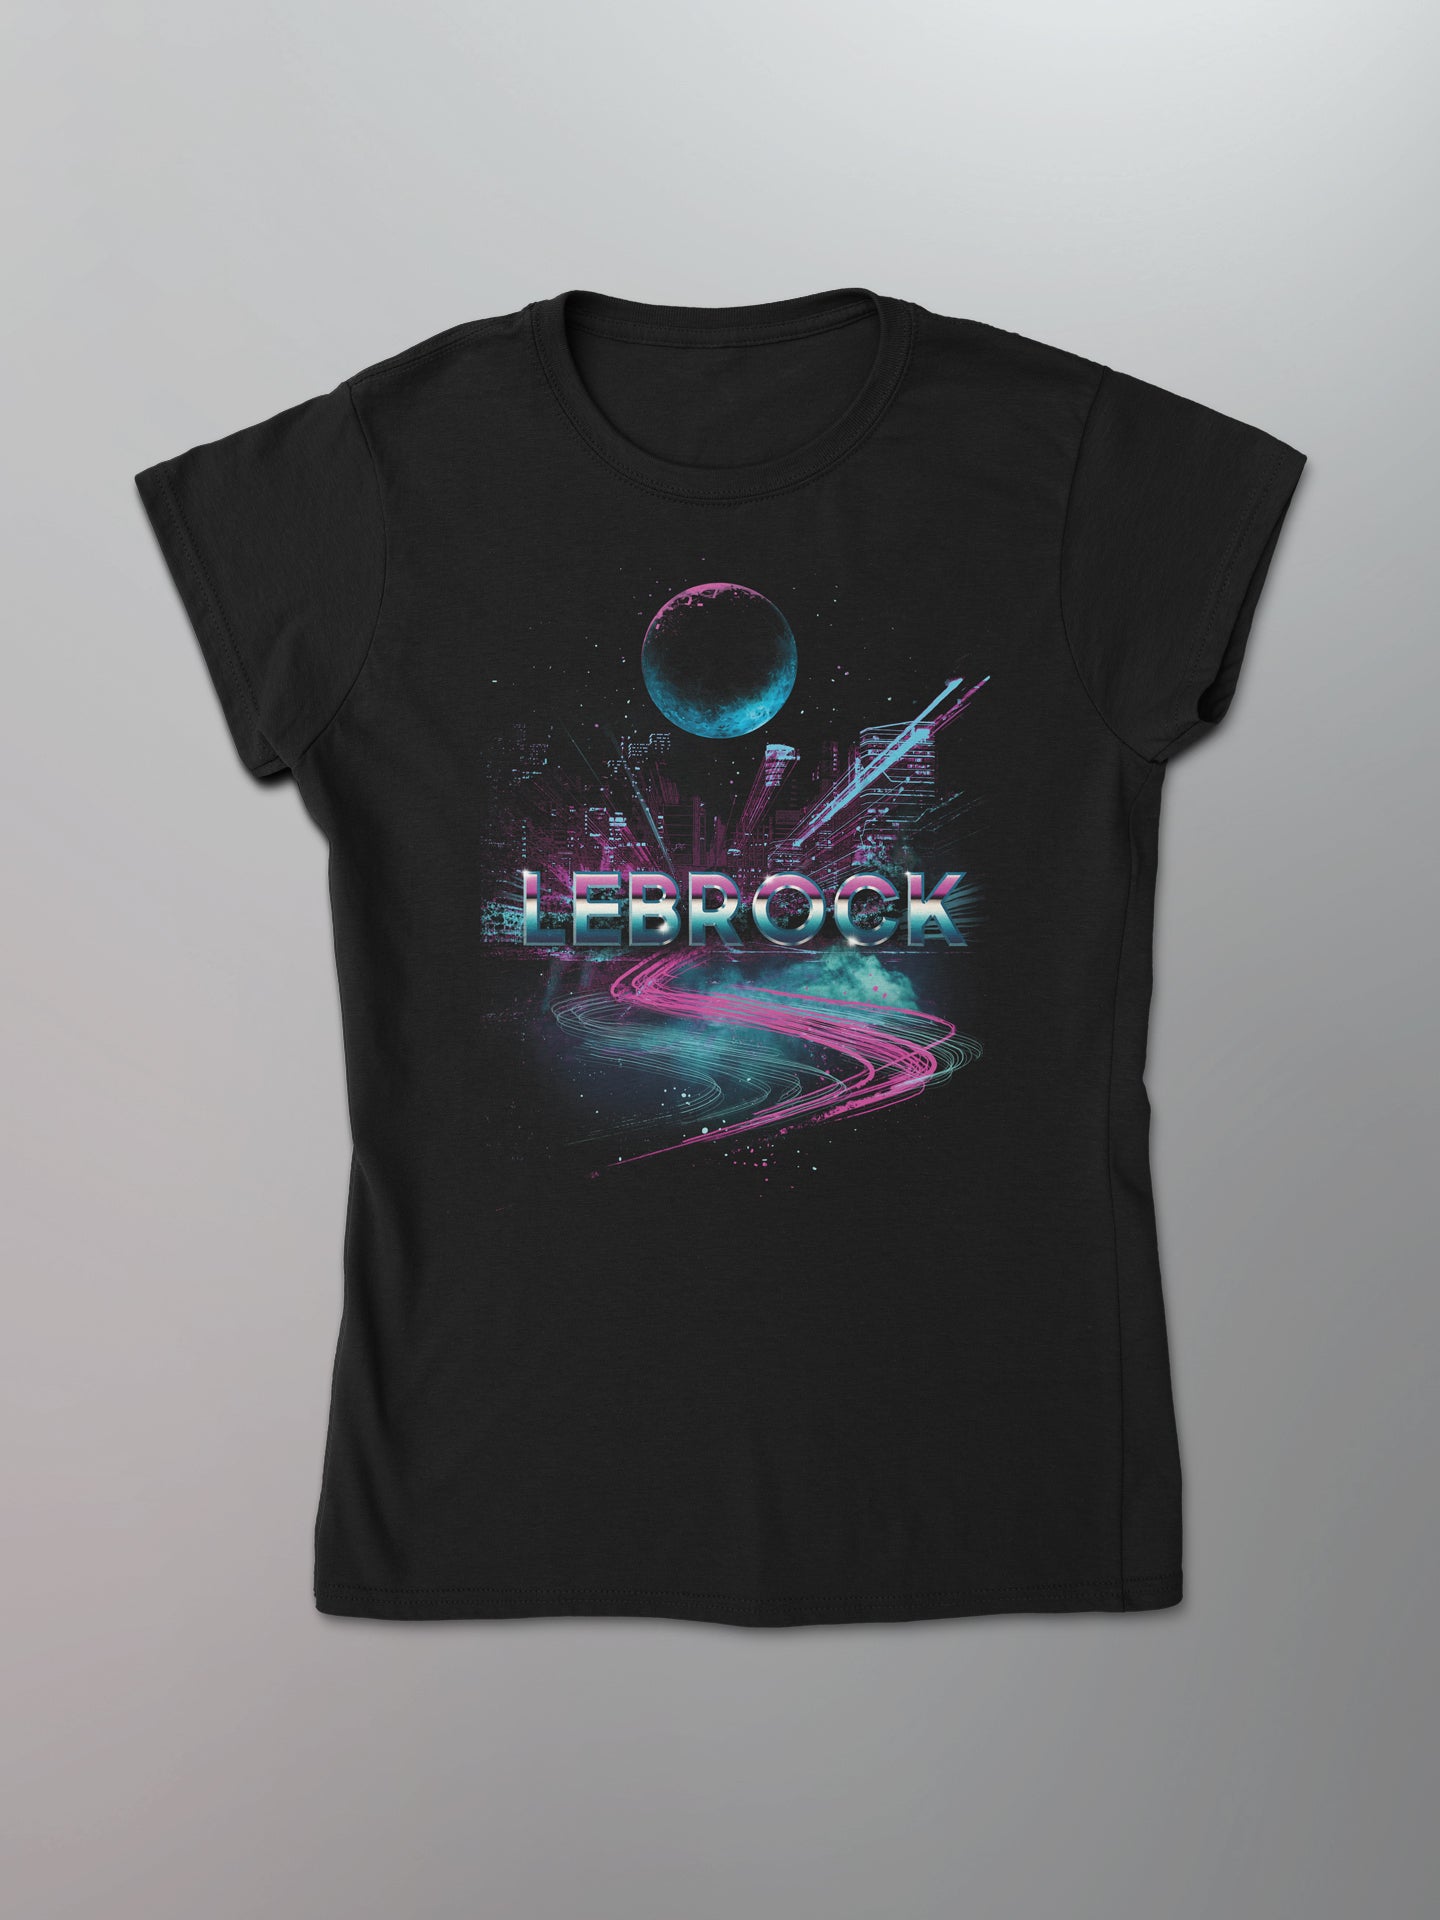 LeBrock - Action & Romance Women's Shirt